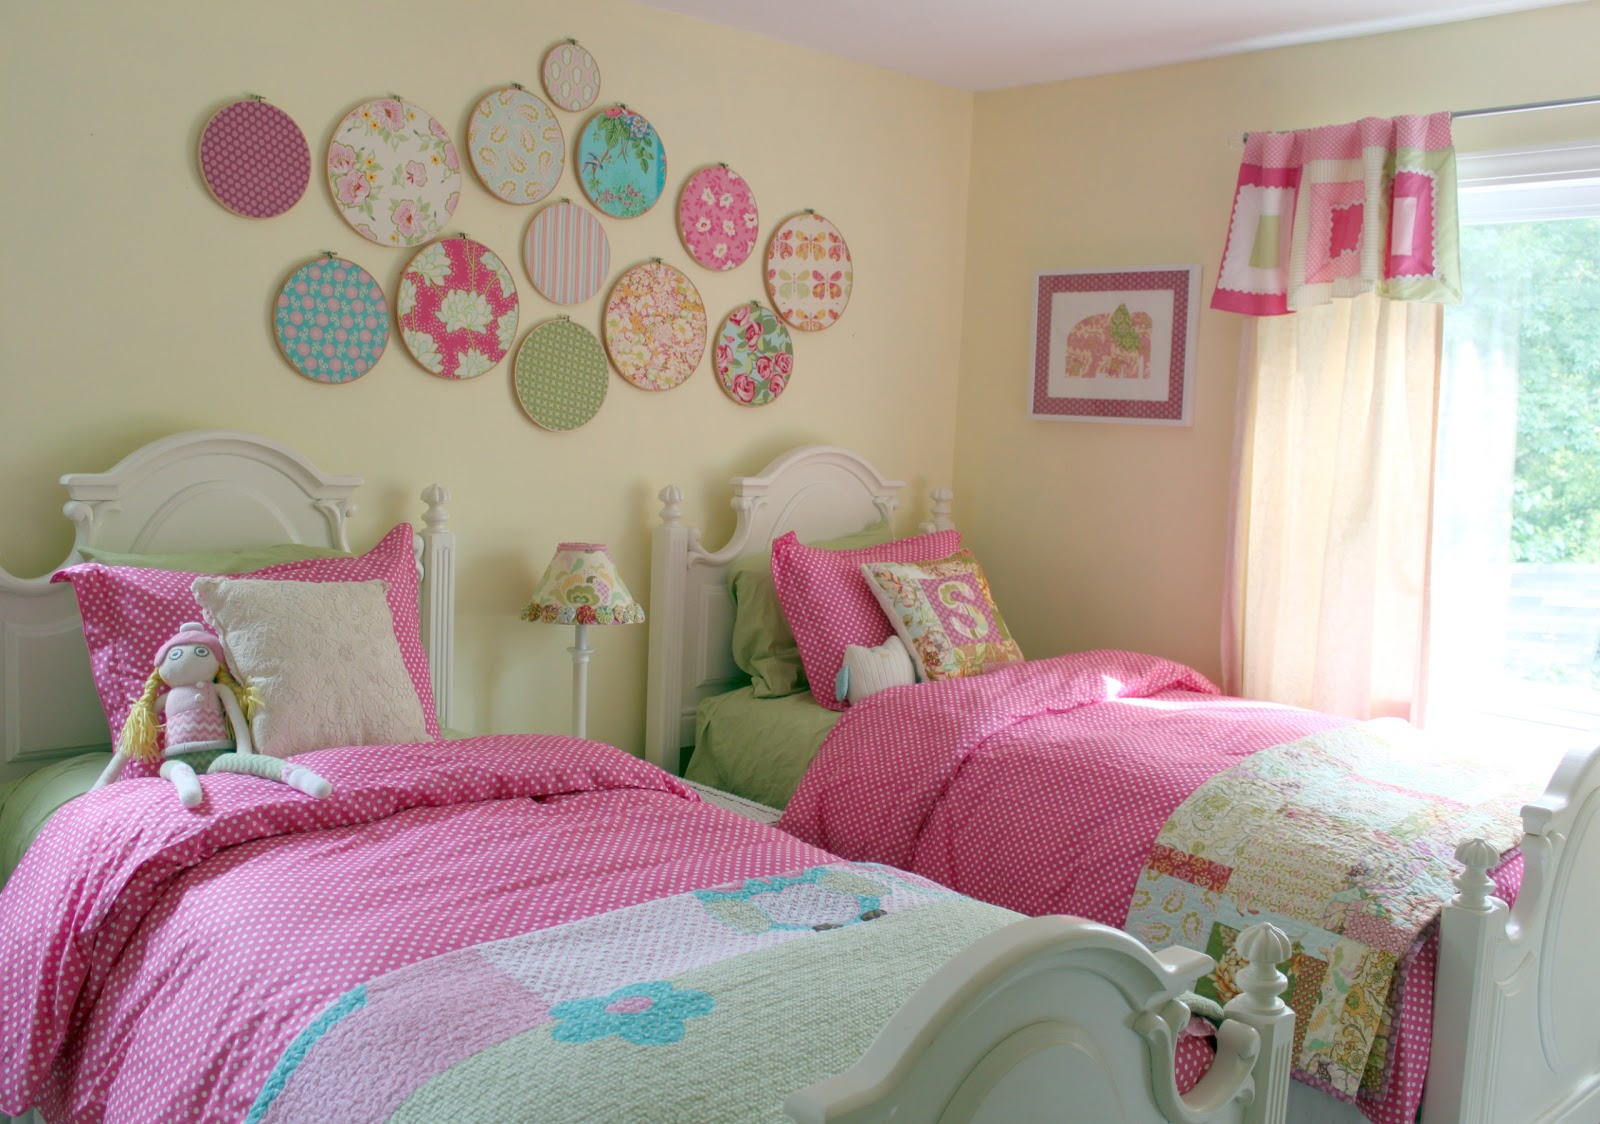 15 Darling Dorm Room Decor Ideas